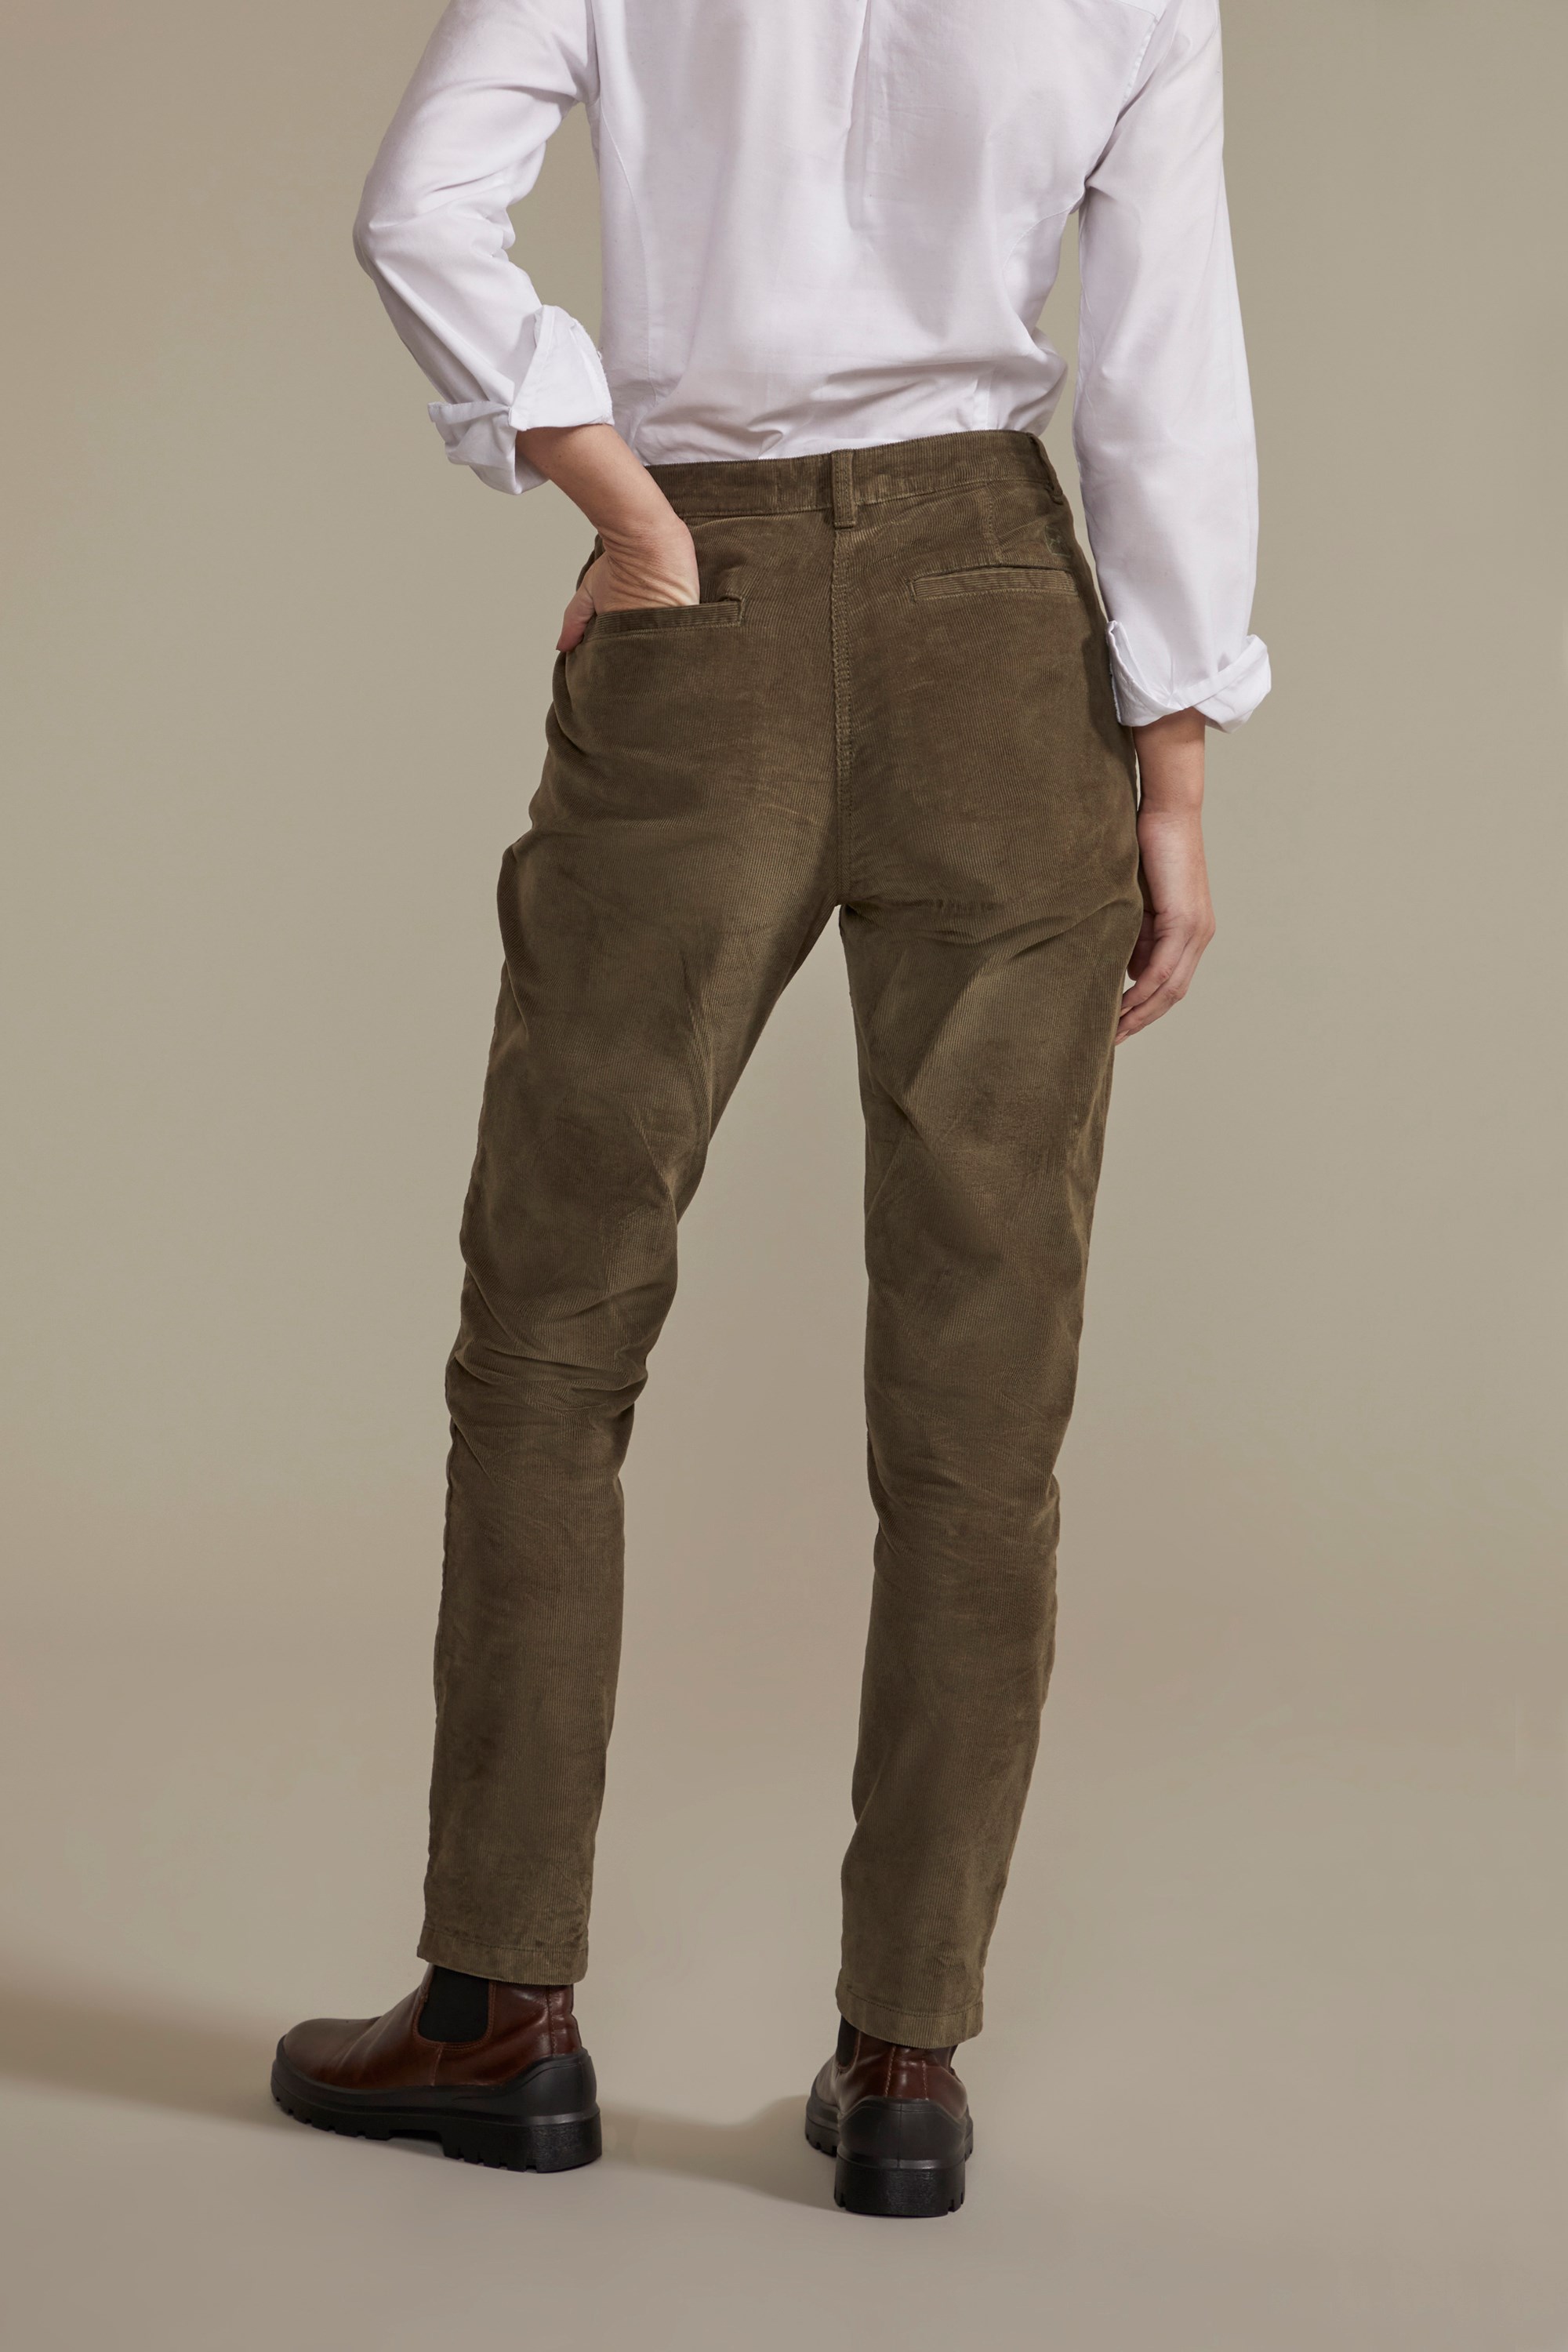 Brown Corduroy trousers  BU  Custom Clothing for Men and Women